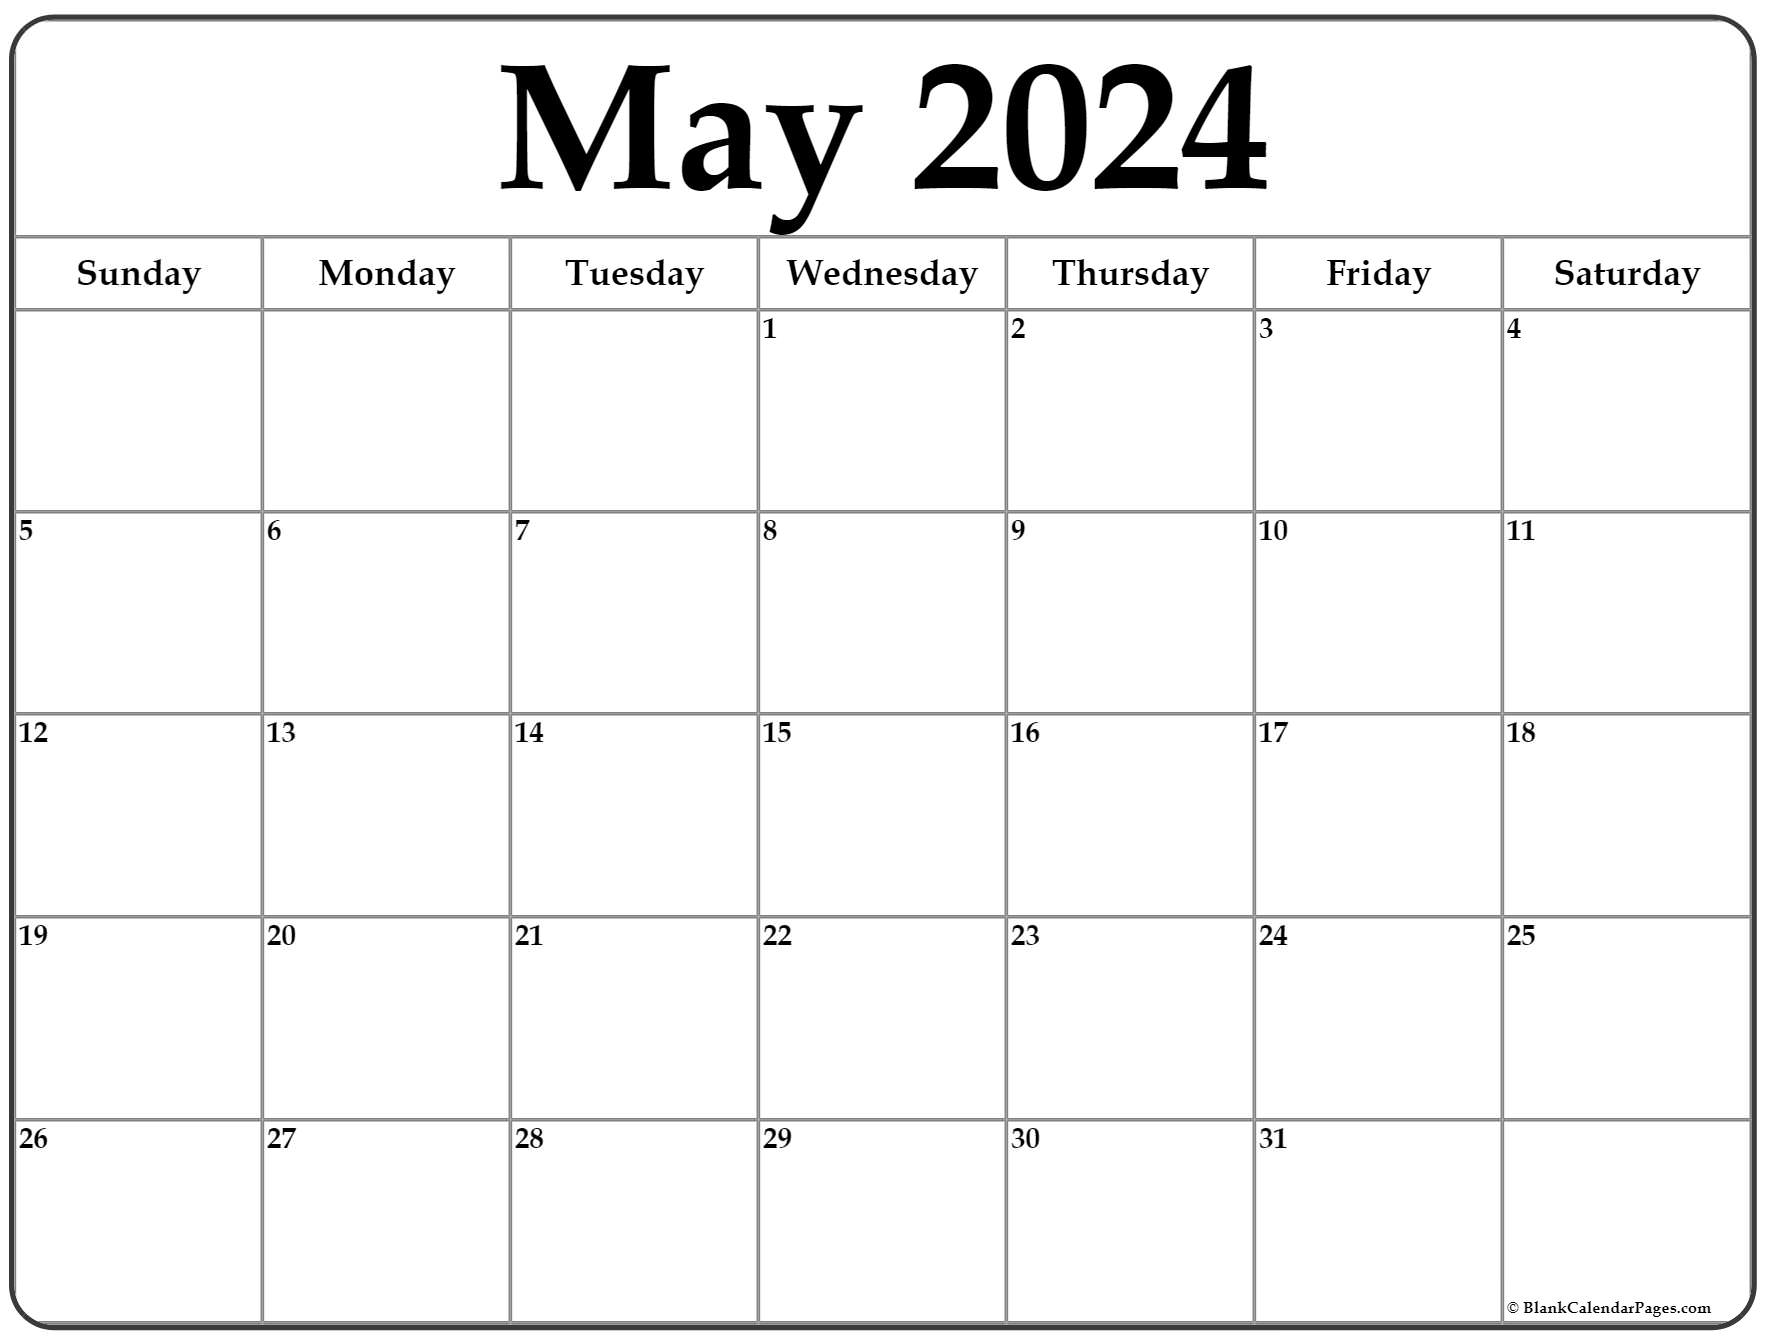 May Calendar 2022 Pdf May 2022 Calendar | Free Printable Calendar Templates